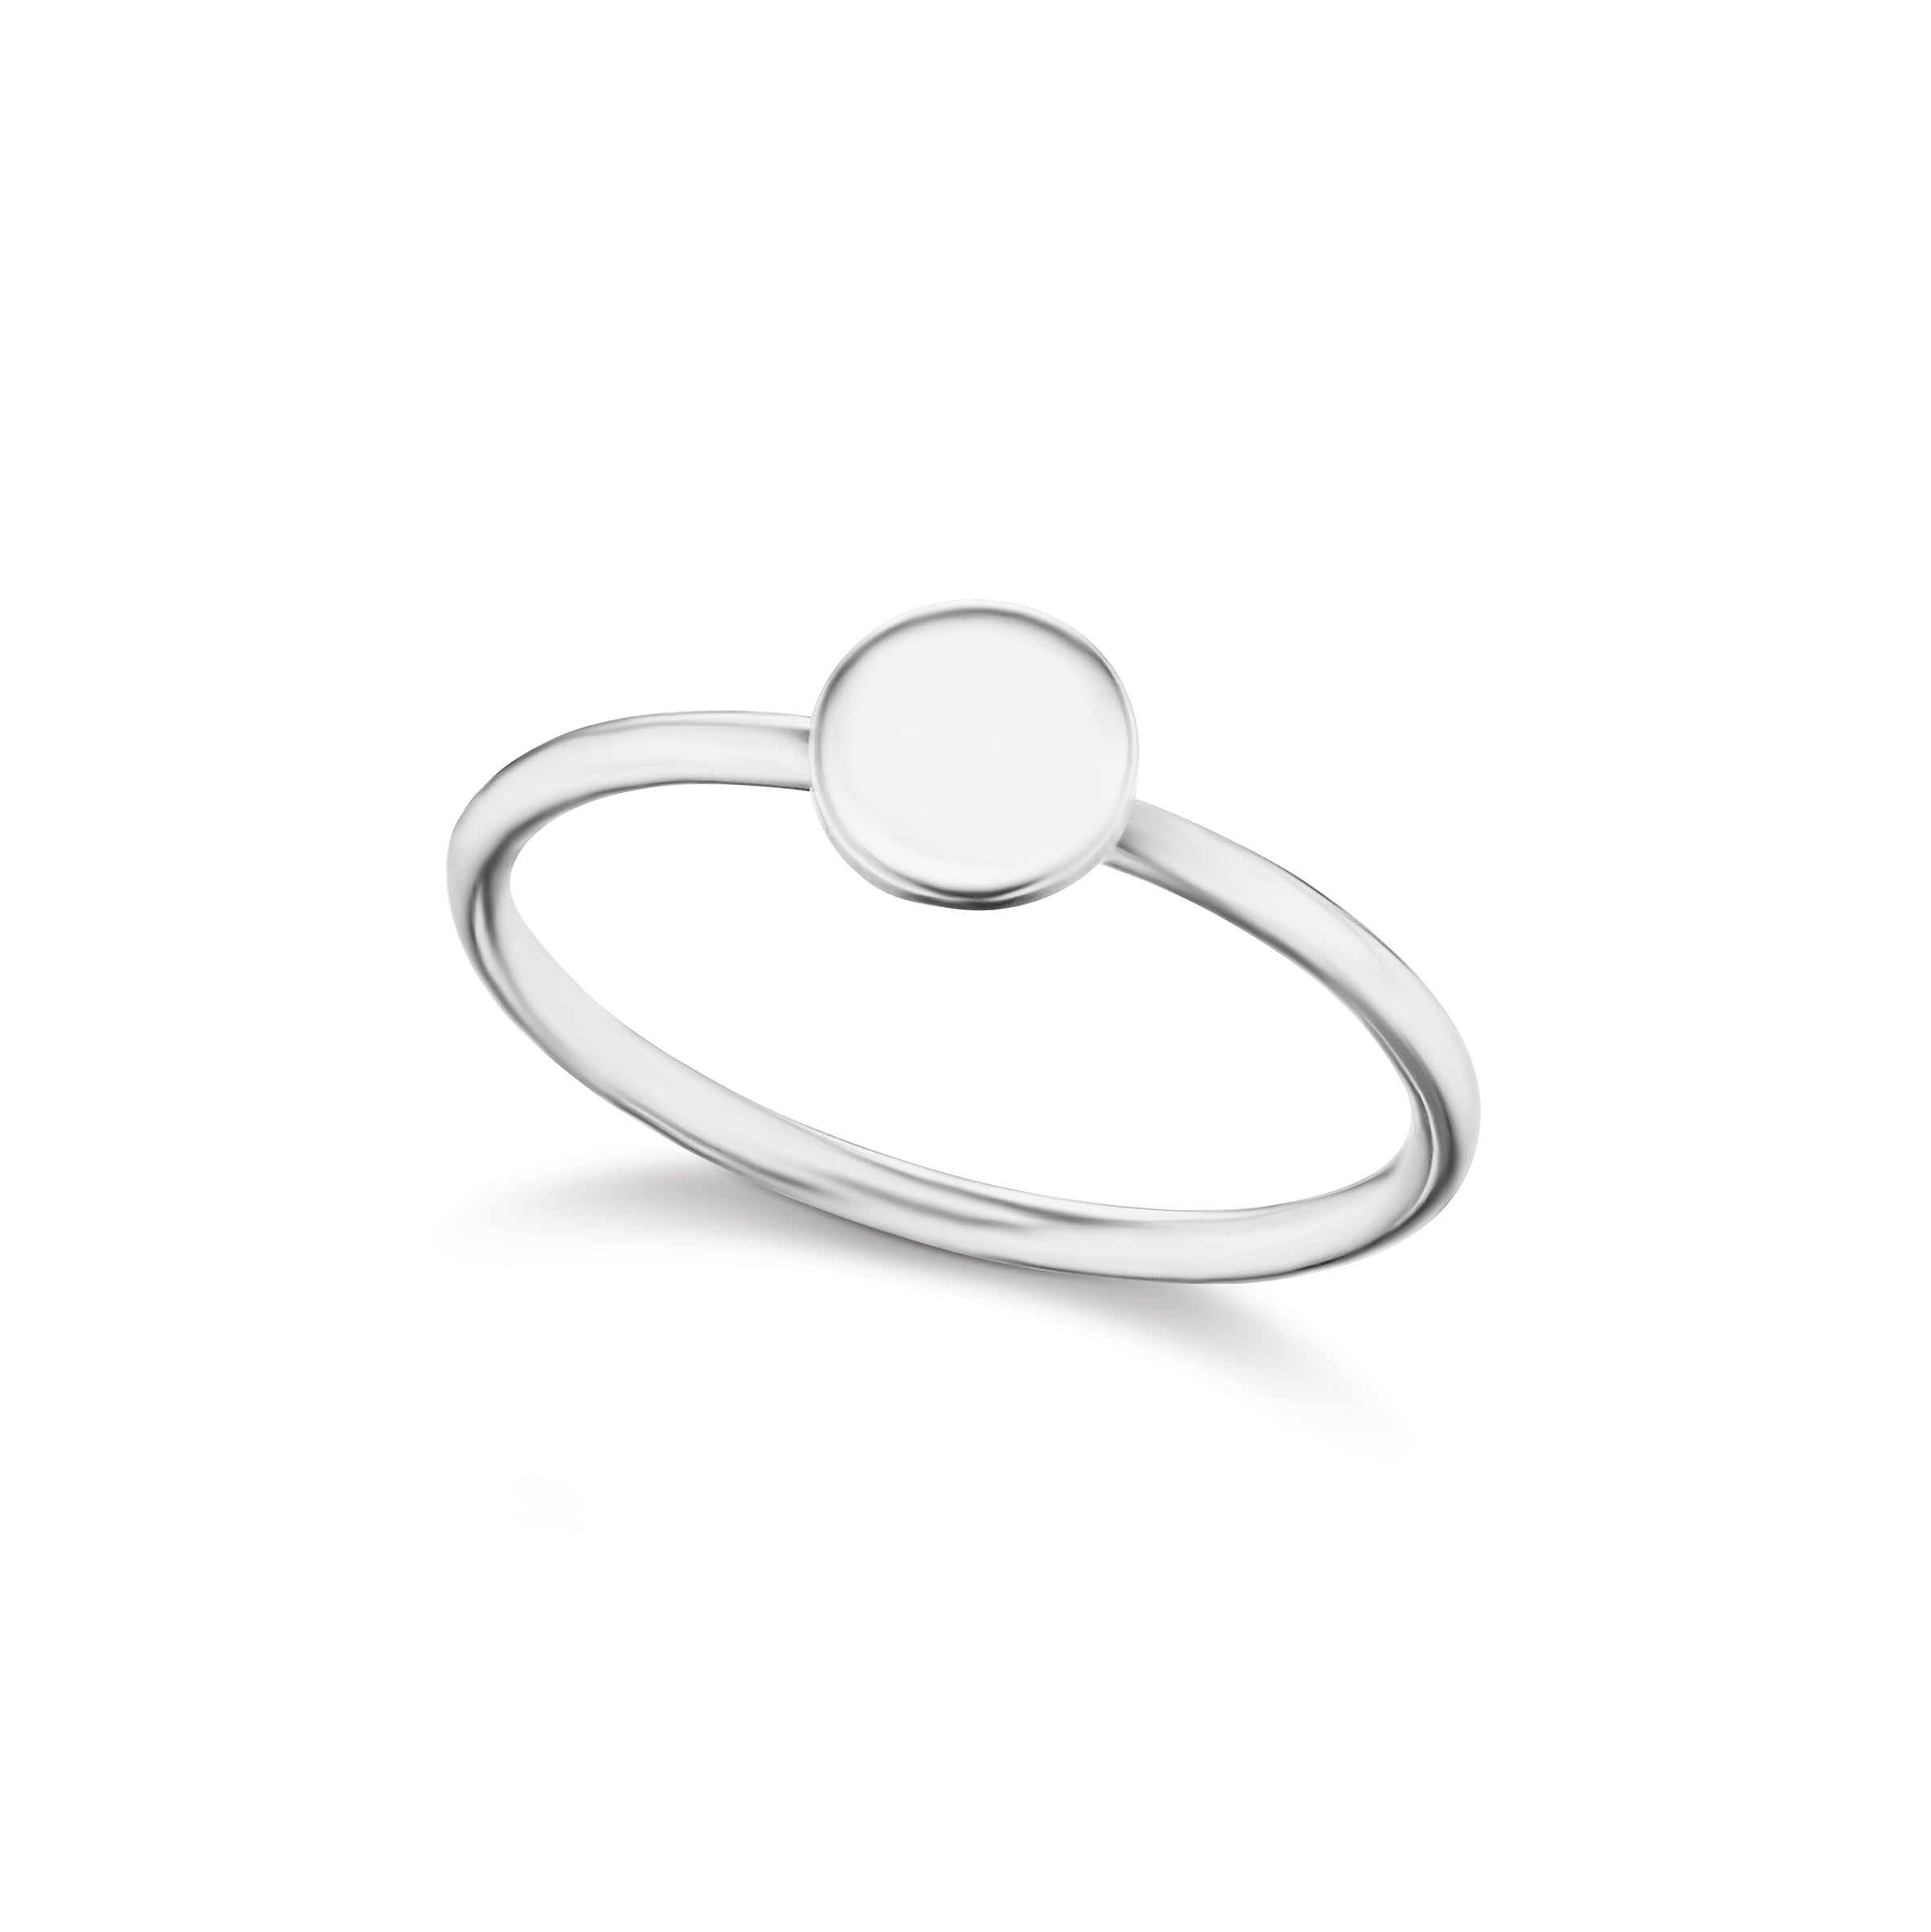 The Silver Petite Signature Ring